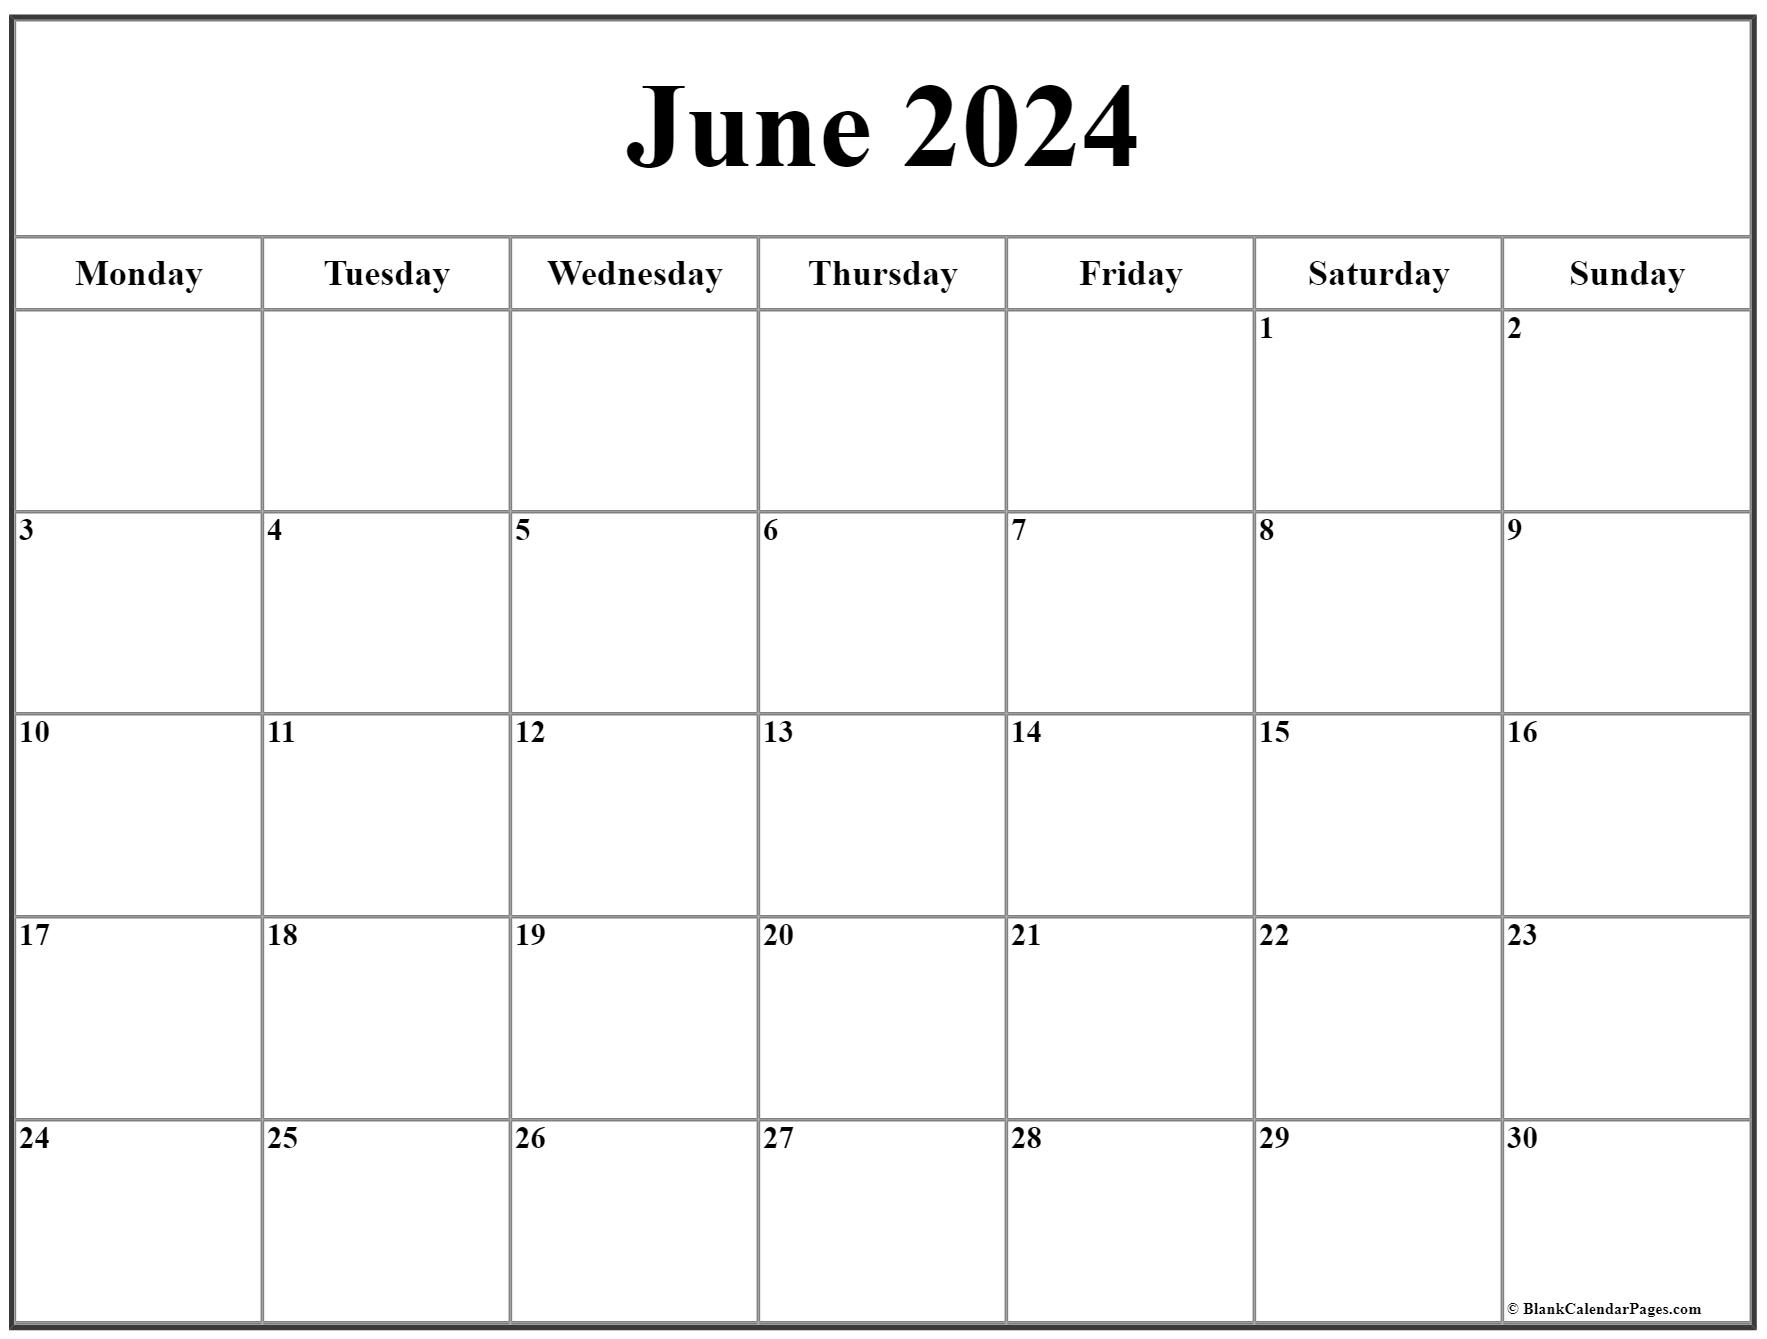 June 2024 Monday Calendar | Monday To Sunday for June 2024 Blank Calendar Printable